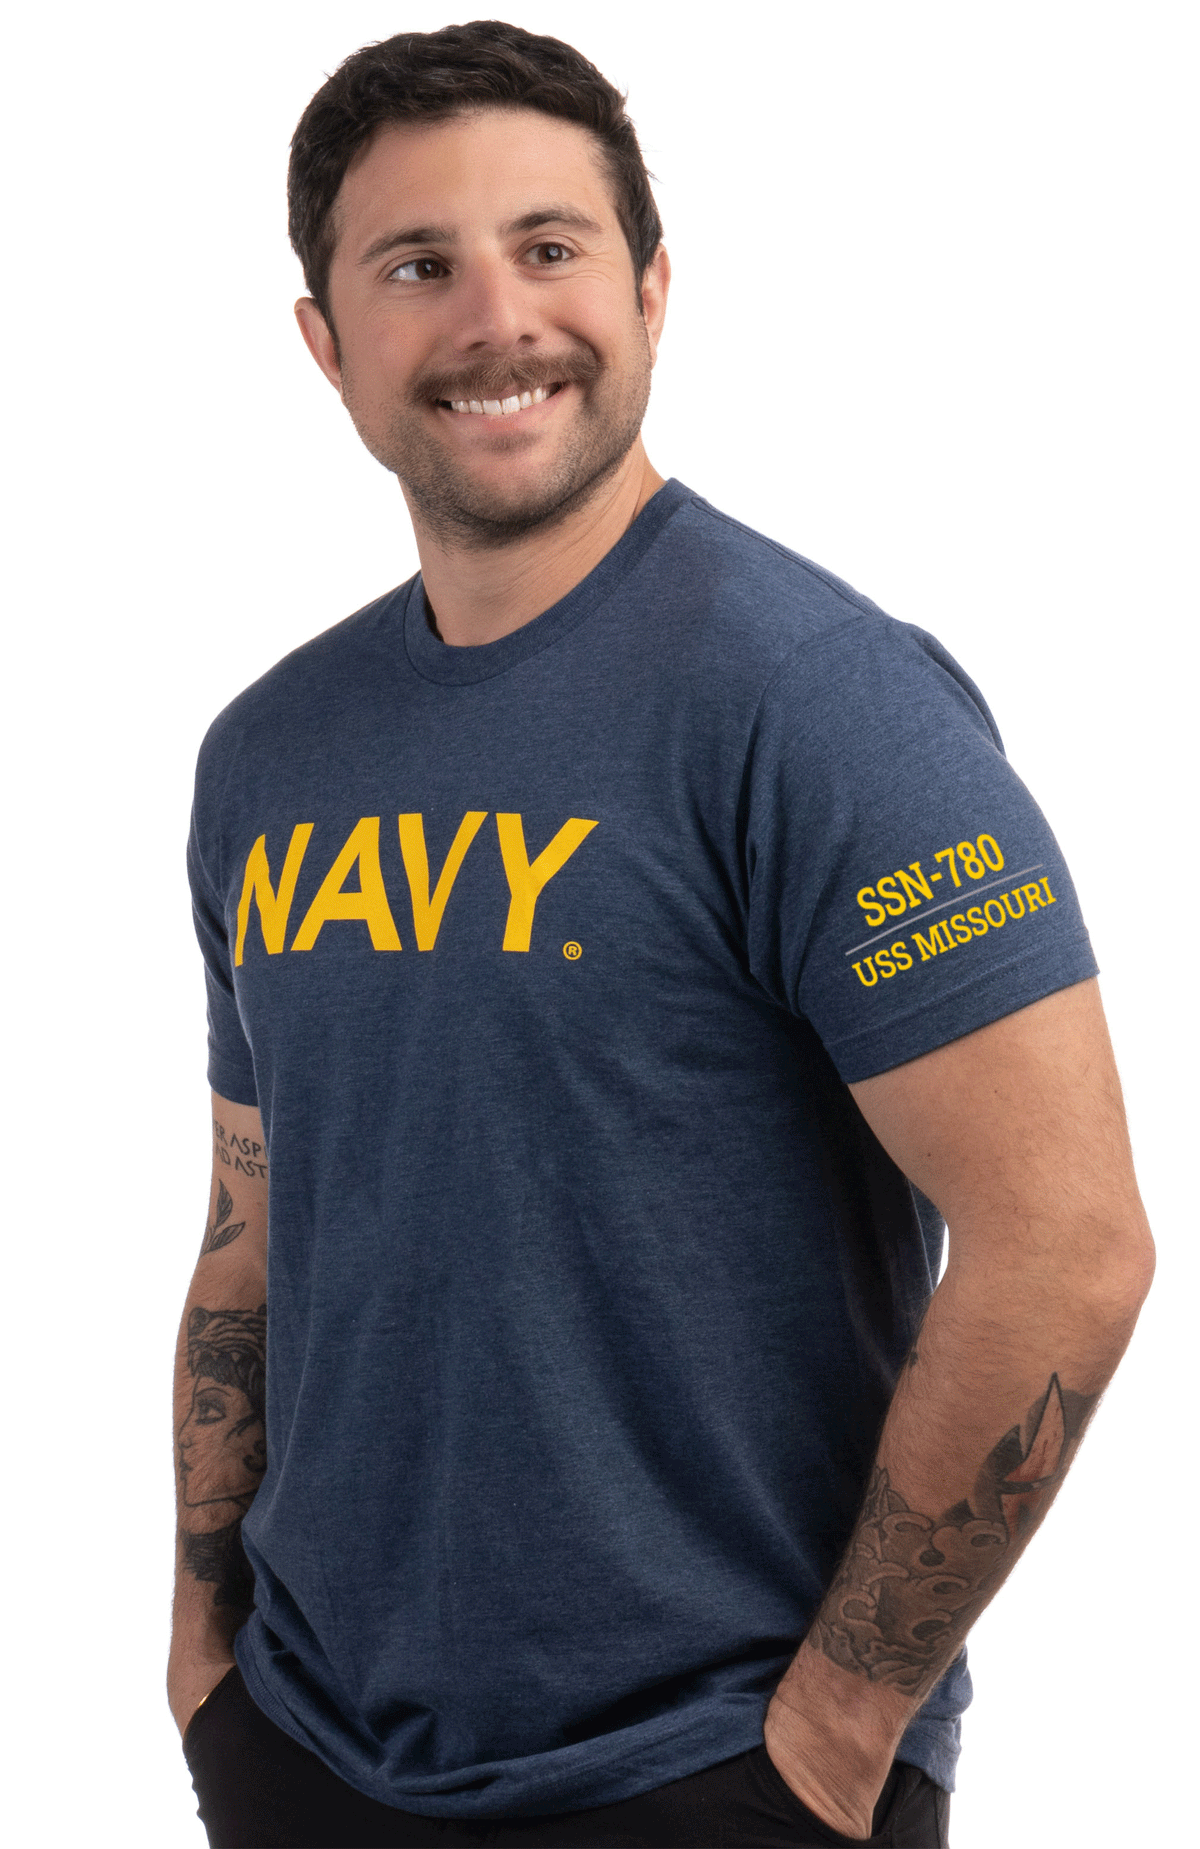 Select a United States Ship | U.S. Navy Sailor Veteran USN United States Naval T-shirt for Men Women